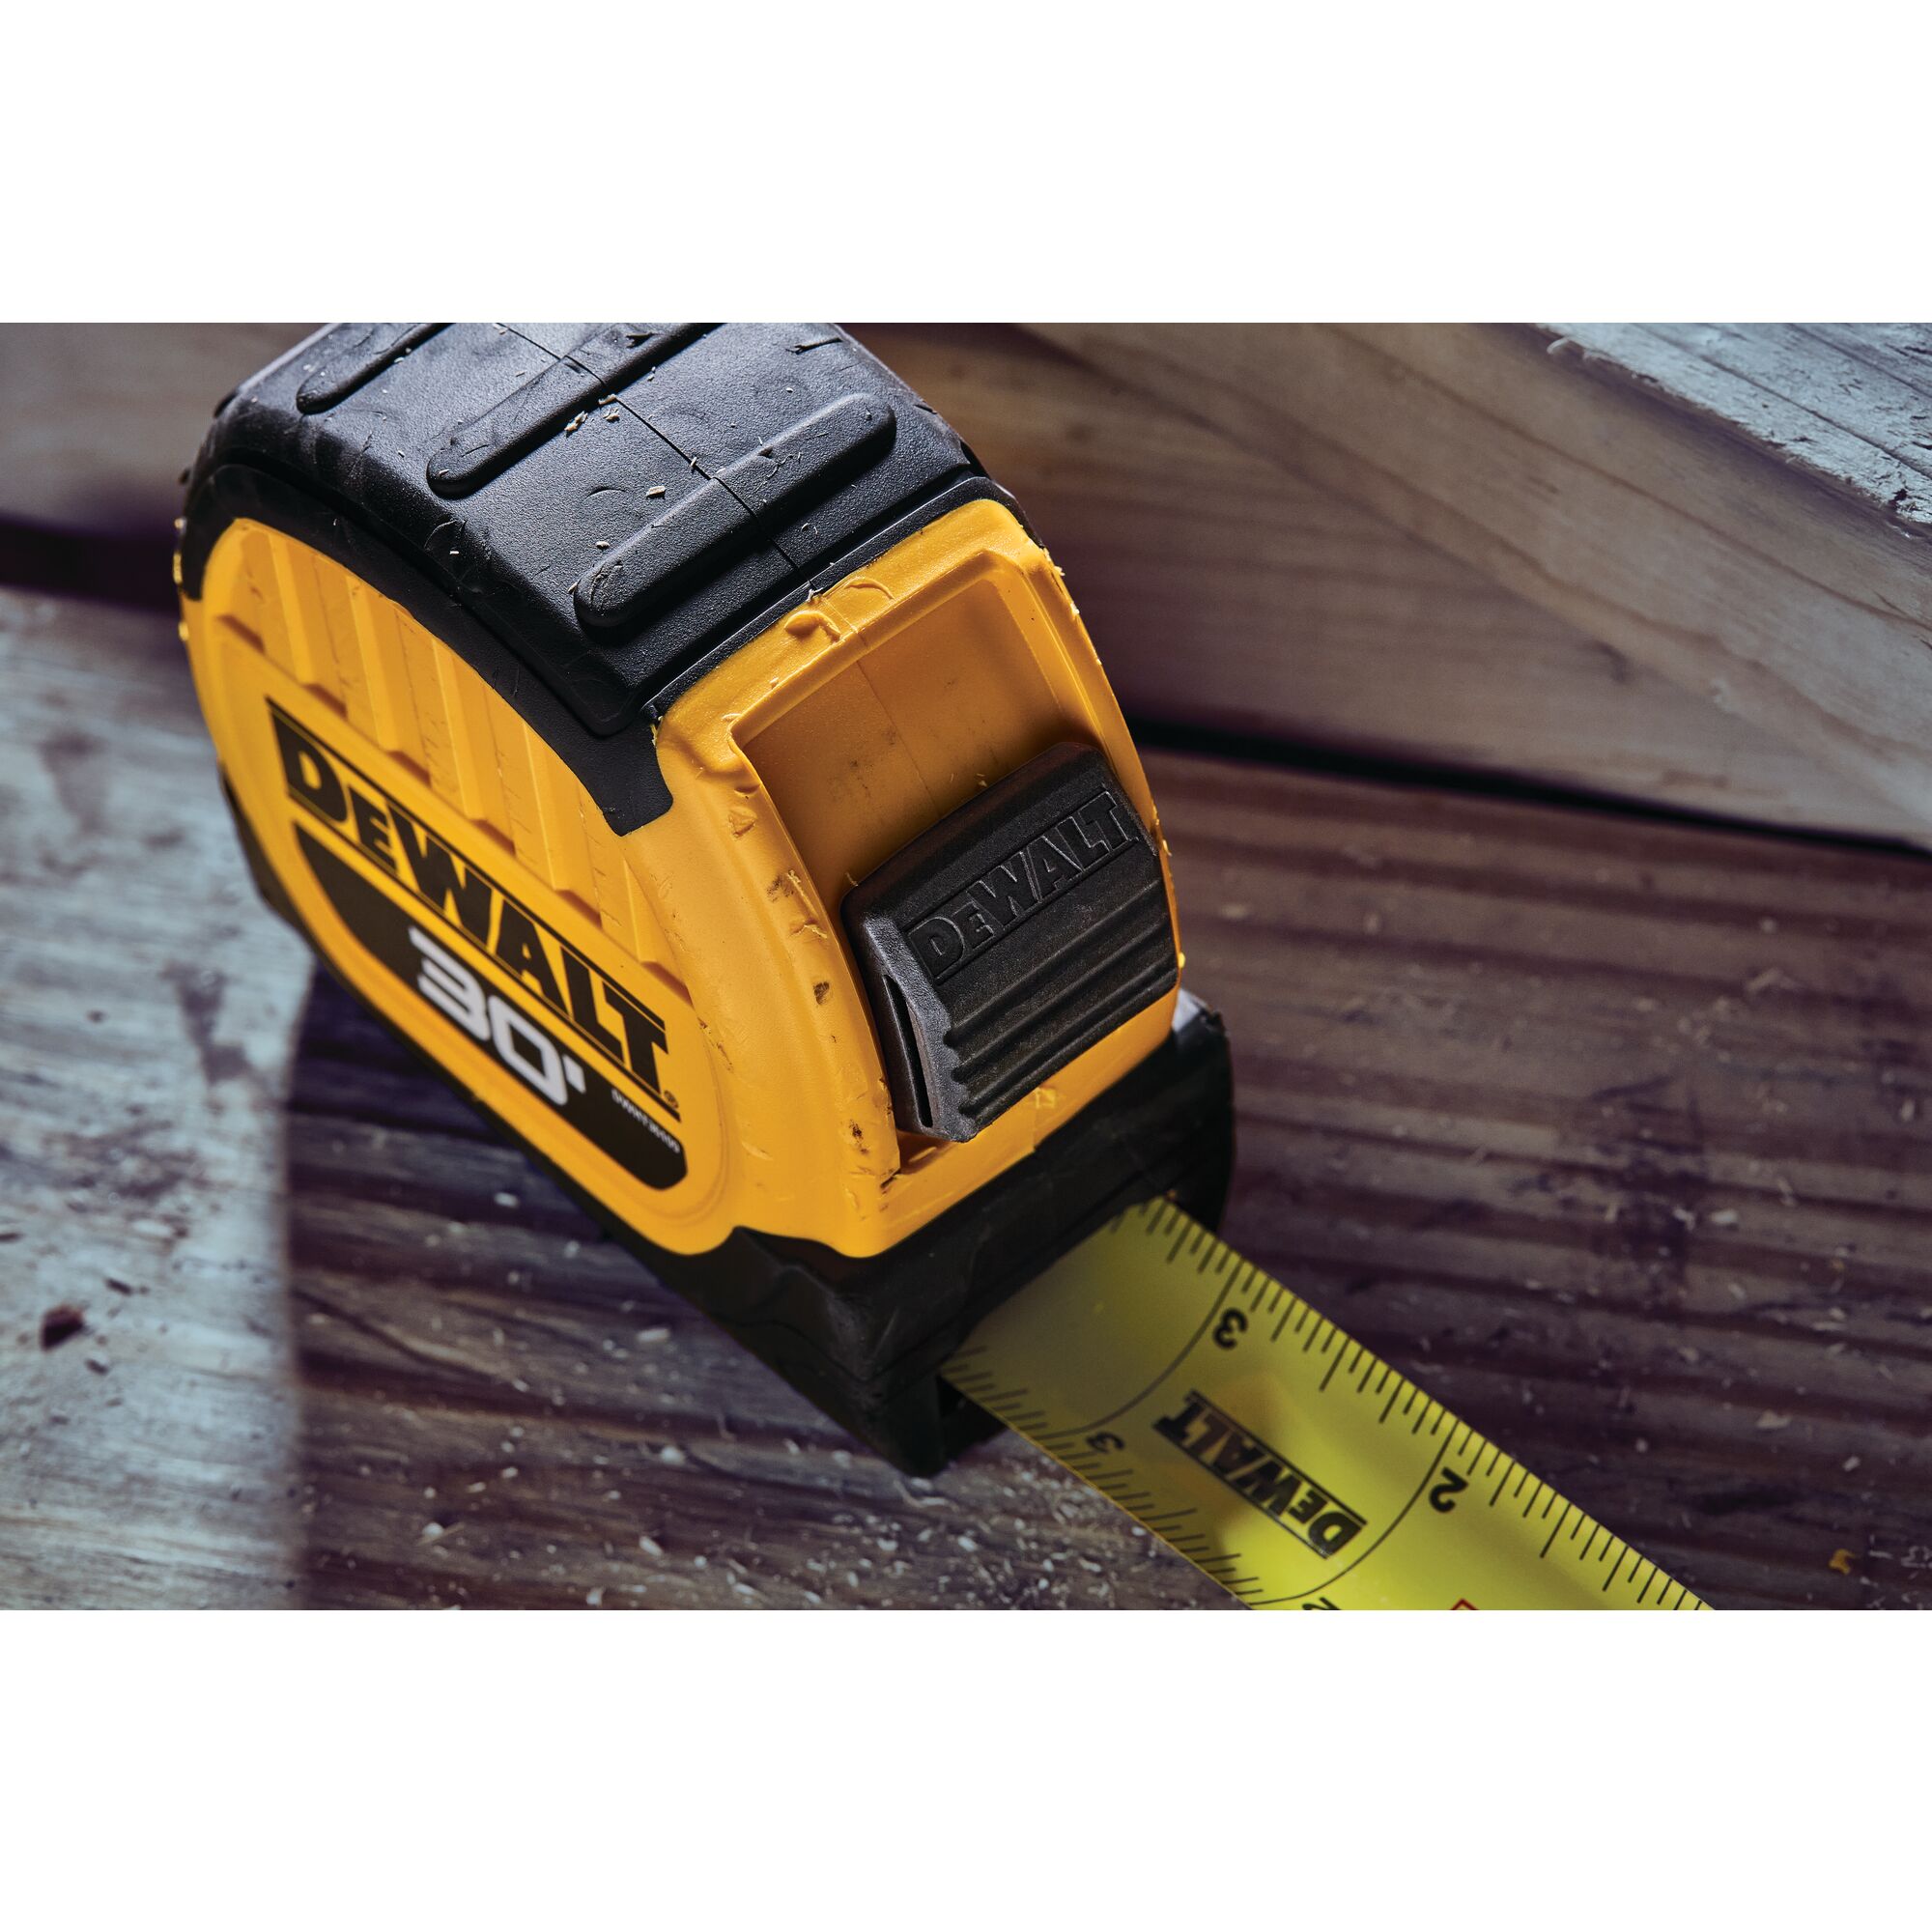 Standard Tape Measure DeWalt DWHT36109 1-1/8 x 30 ft Belt Clip Yellow/Black